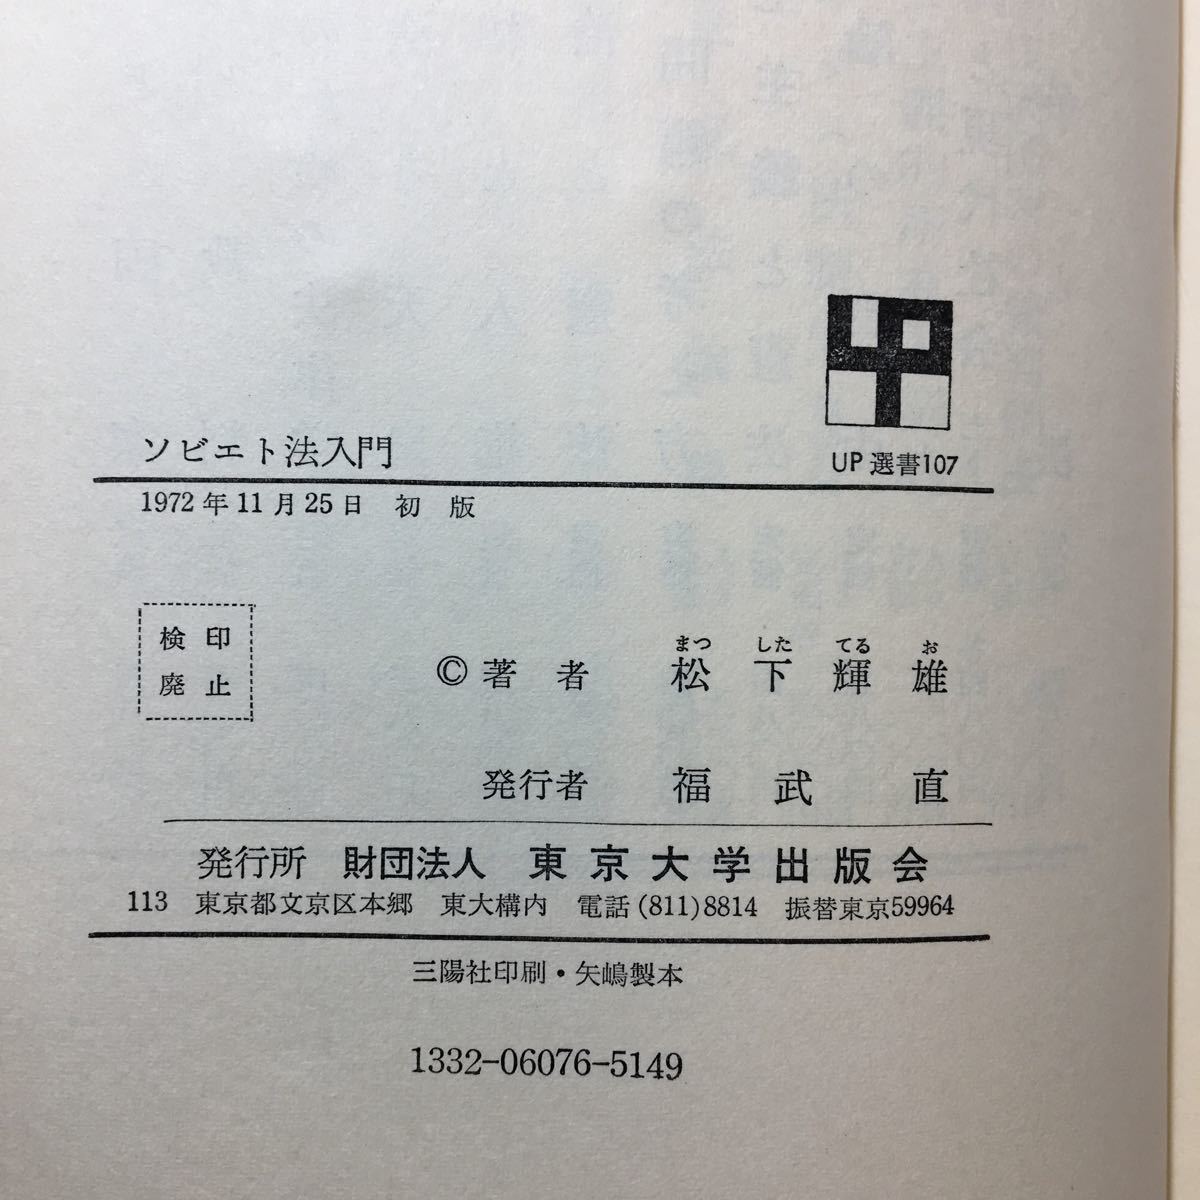 zaa-282♪ソビエト法入門 (1972年) (UP選書) － 松下 輝雄 (著) 東京大学出版会 古書, 1972/1/1 